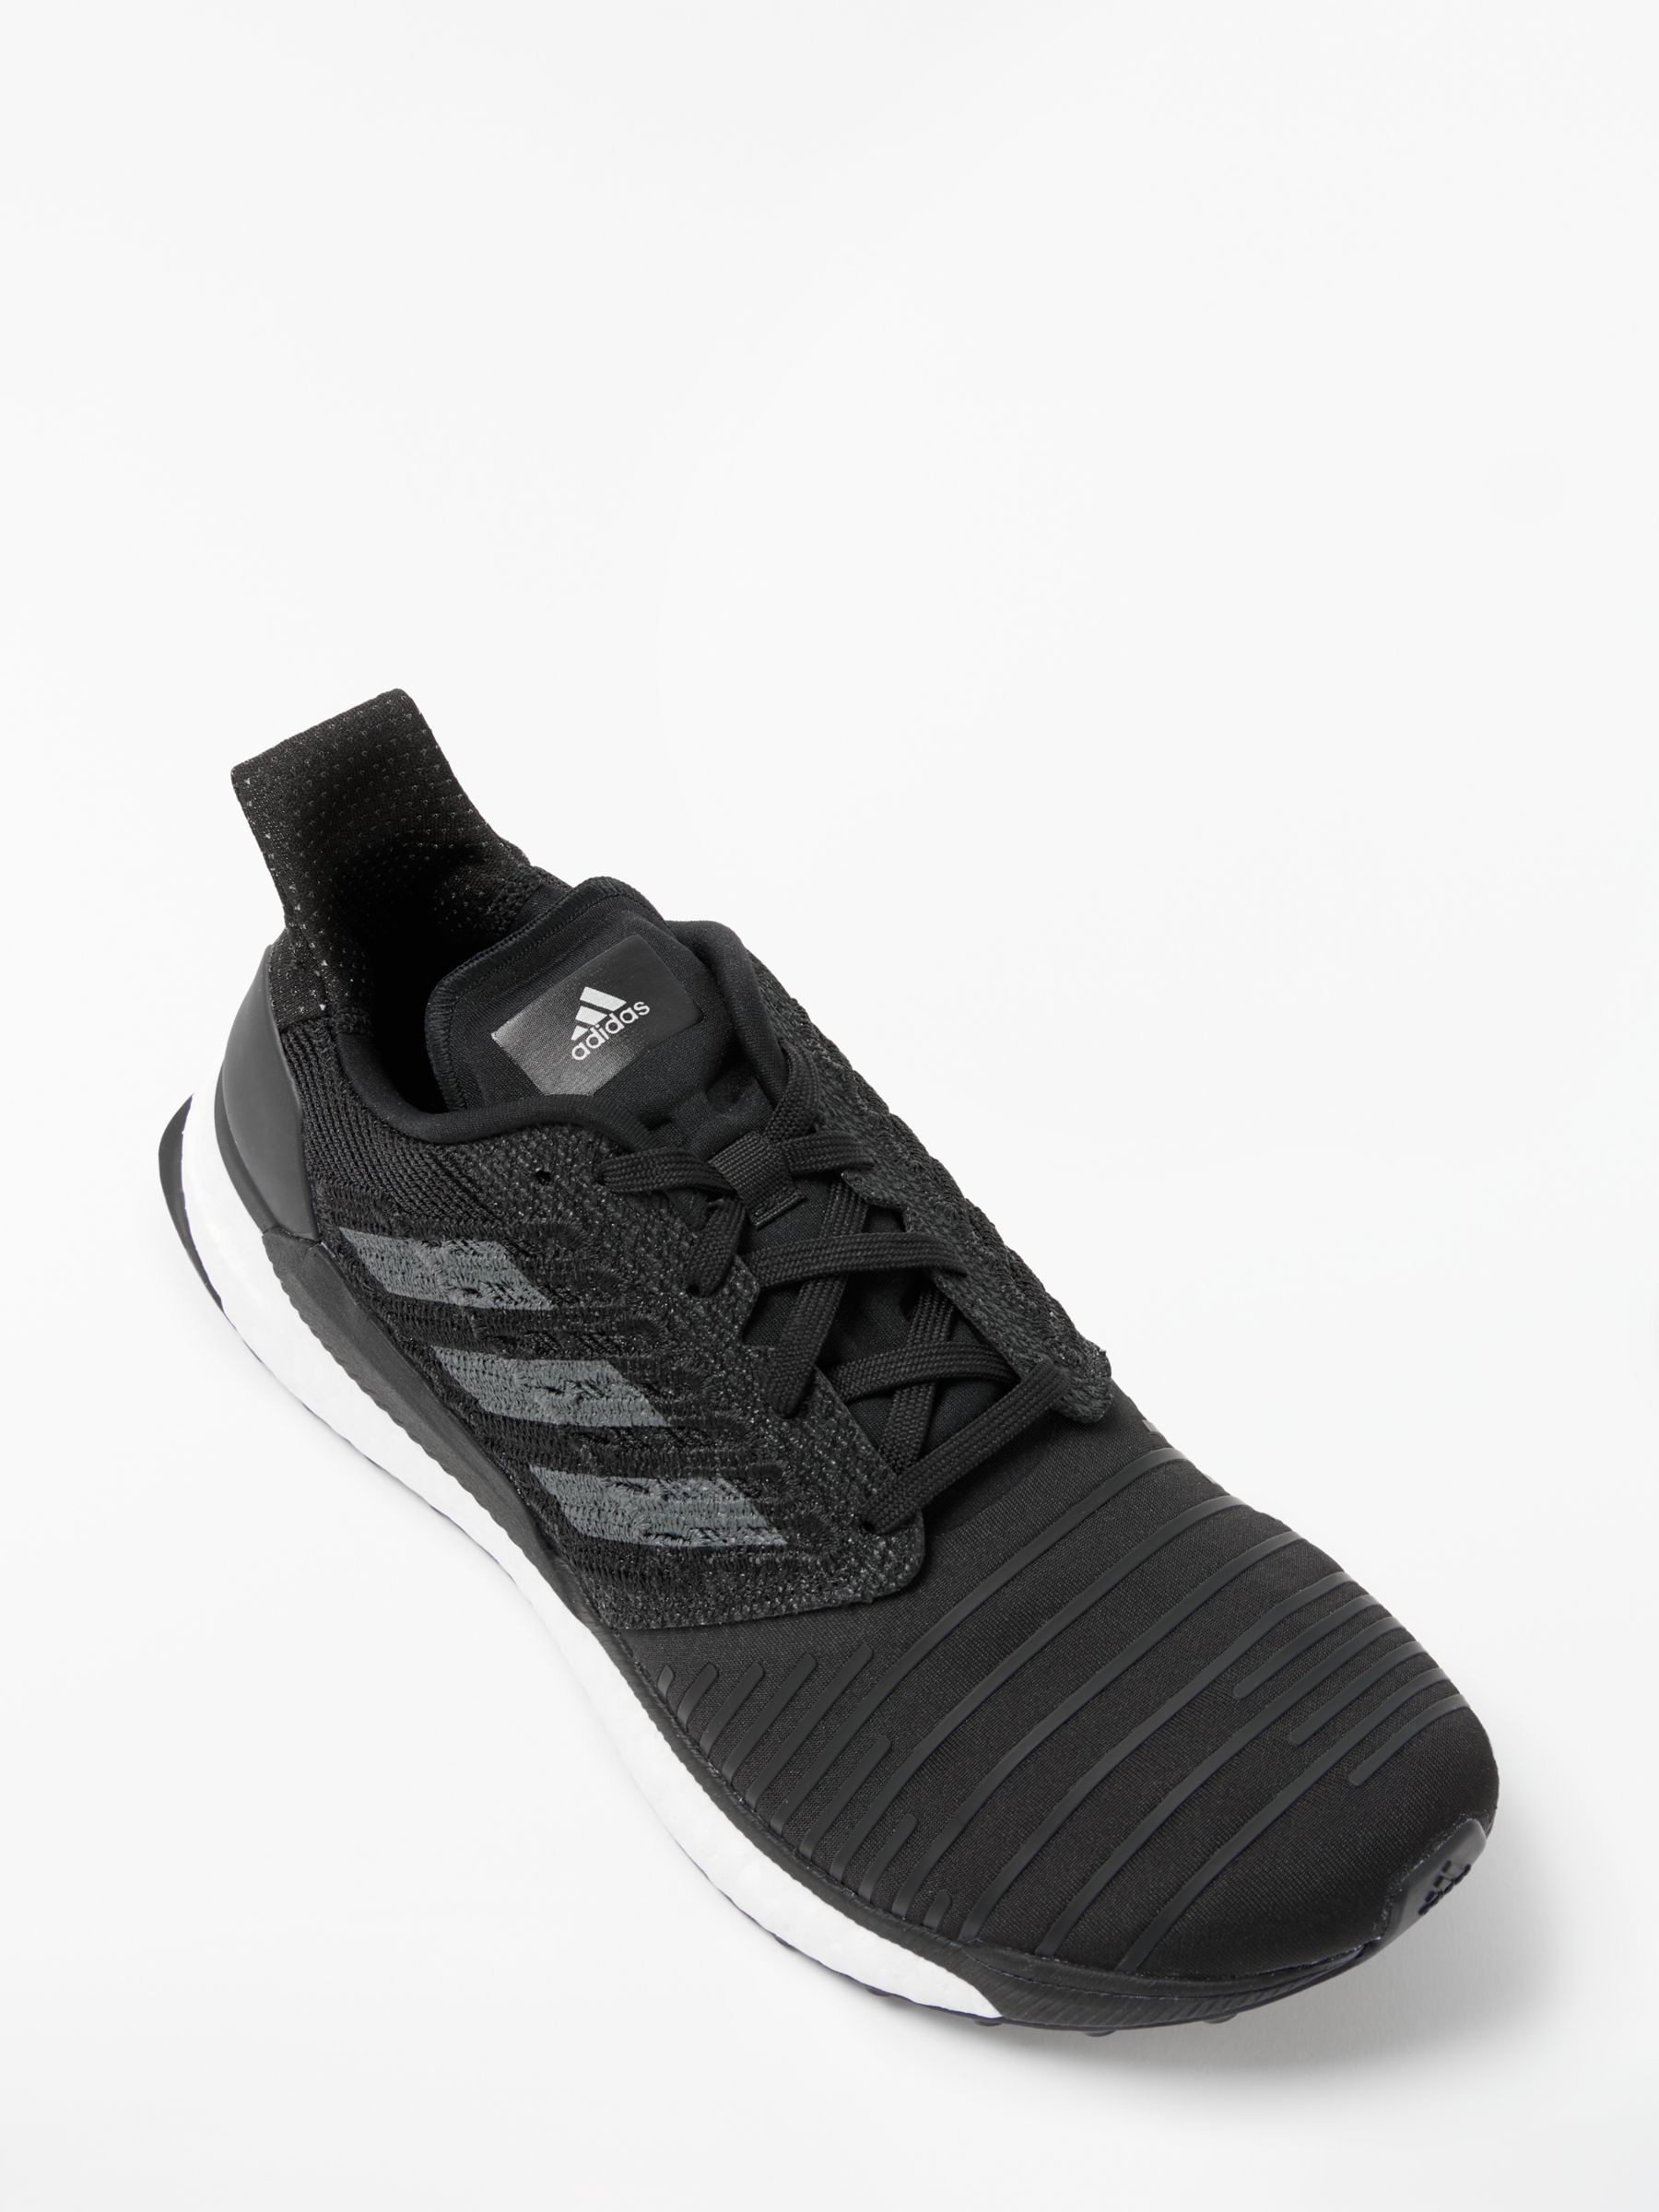 adidas solar boost running shoes men's black